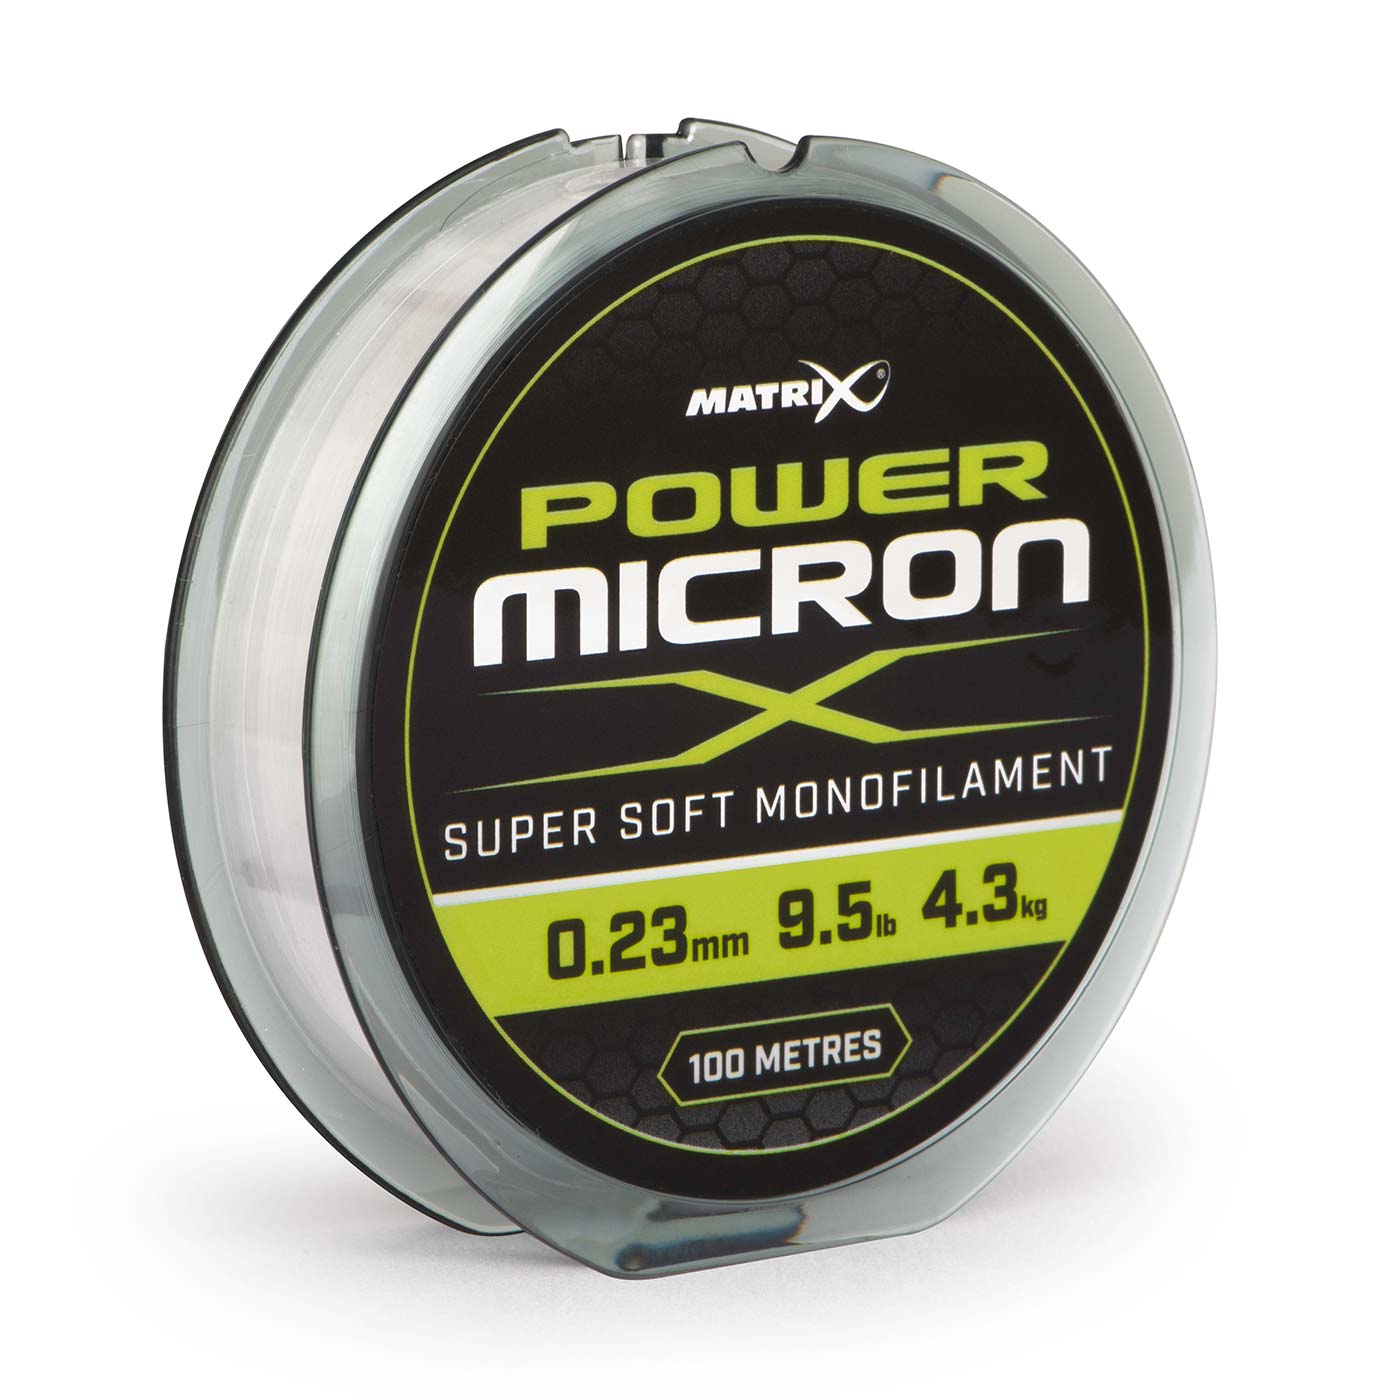 Matrix Power Micron X - Main